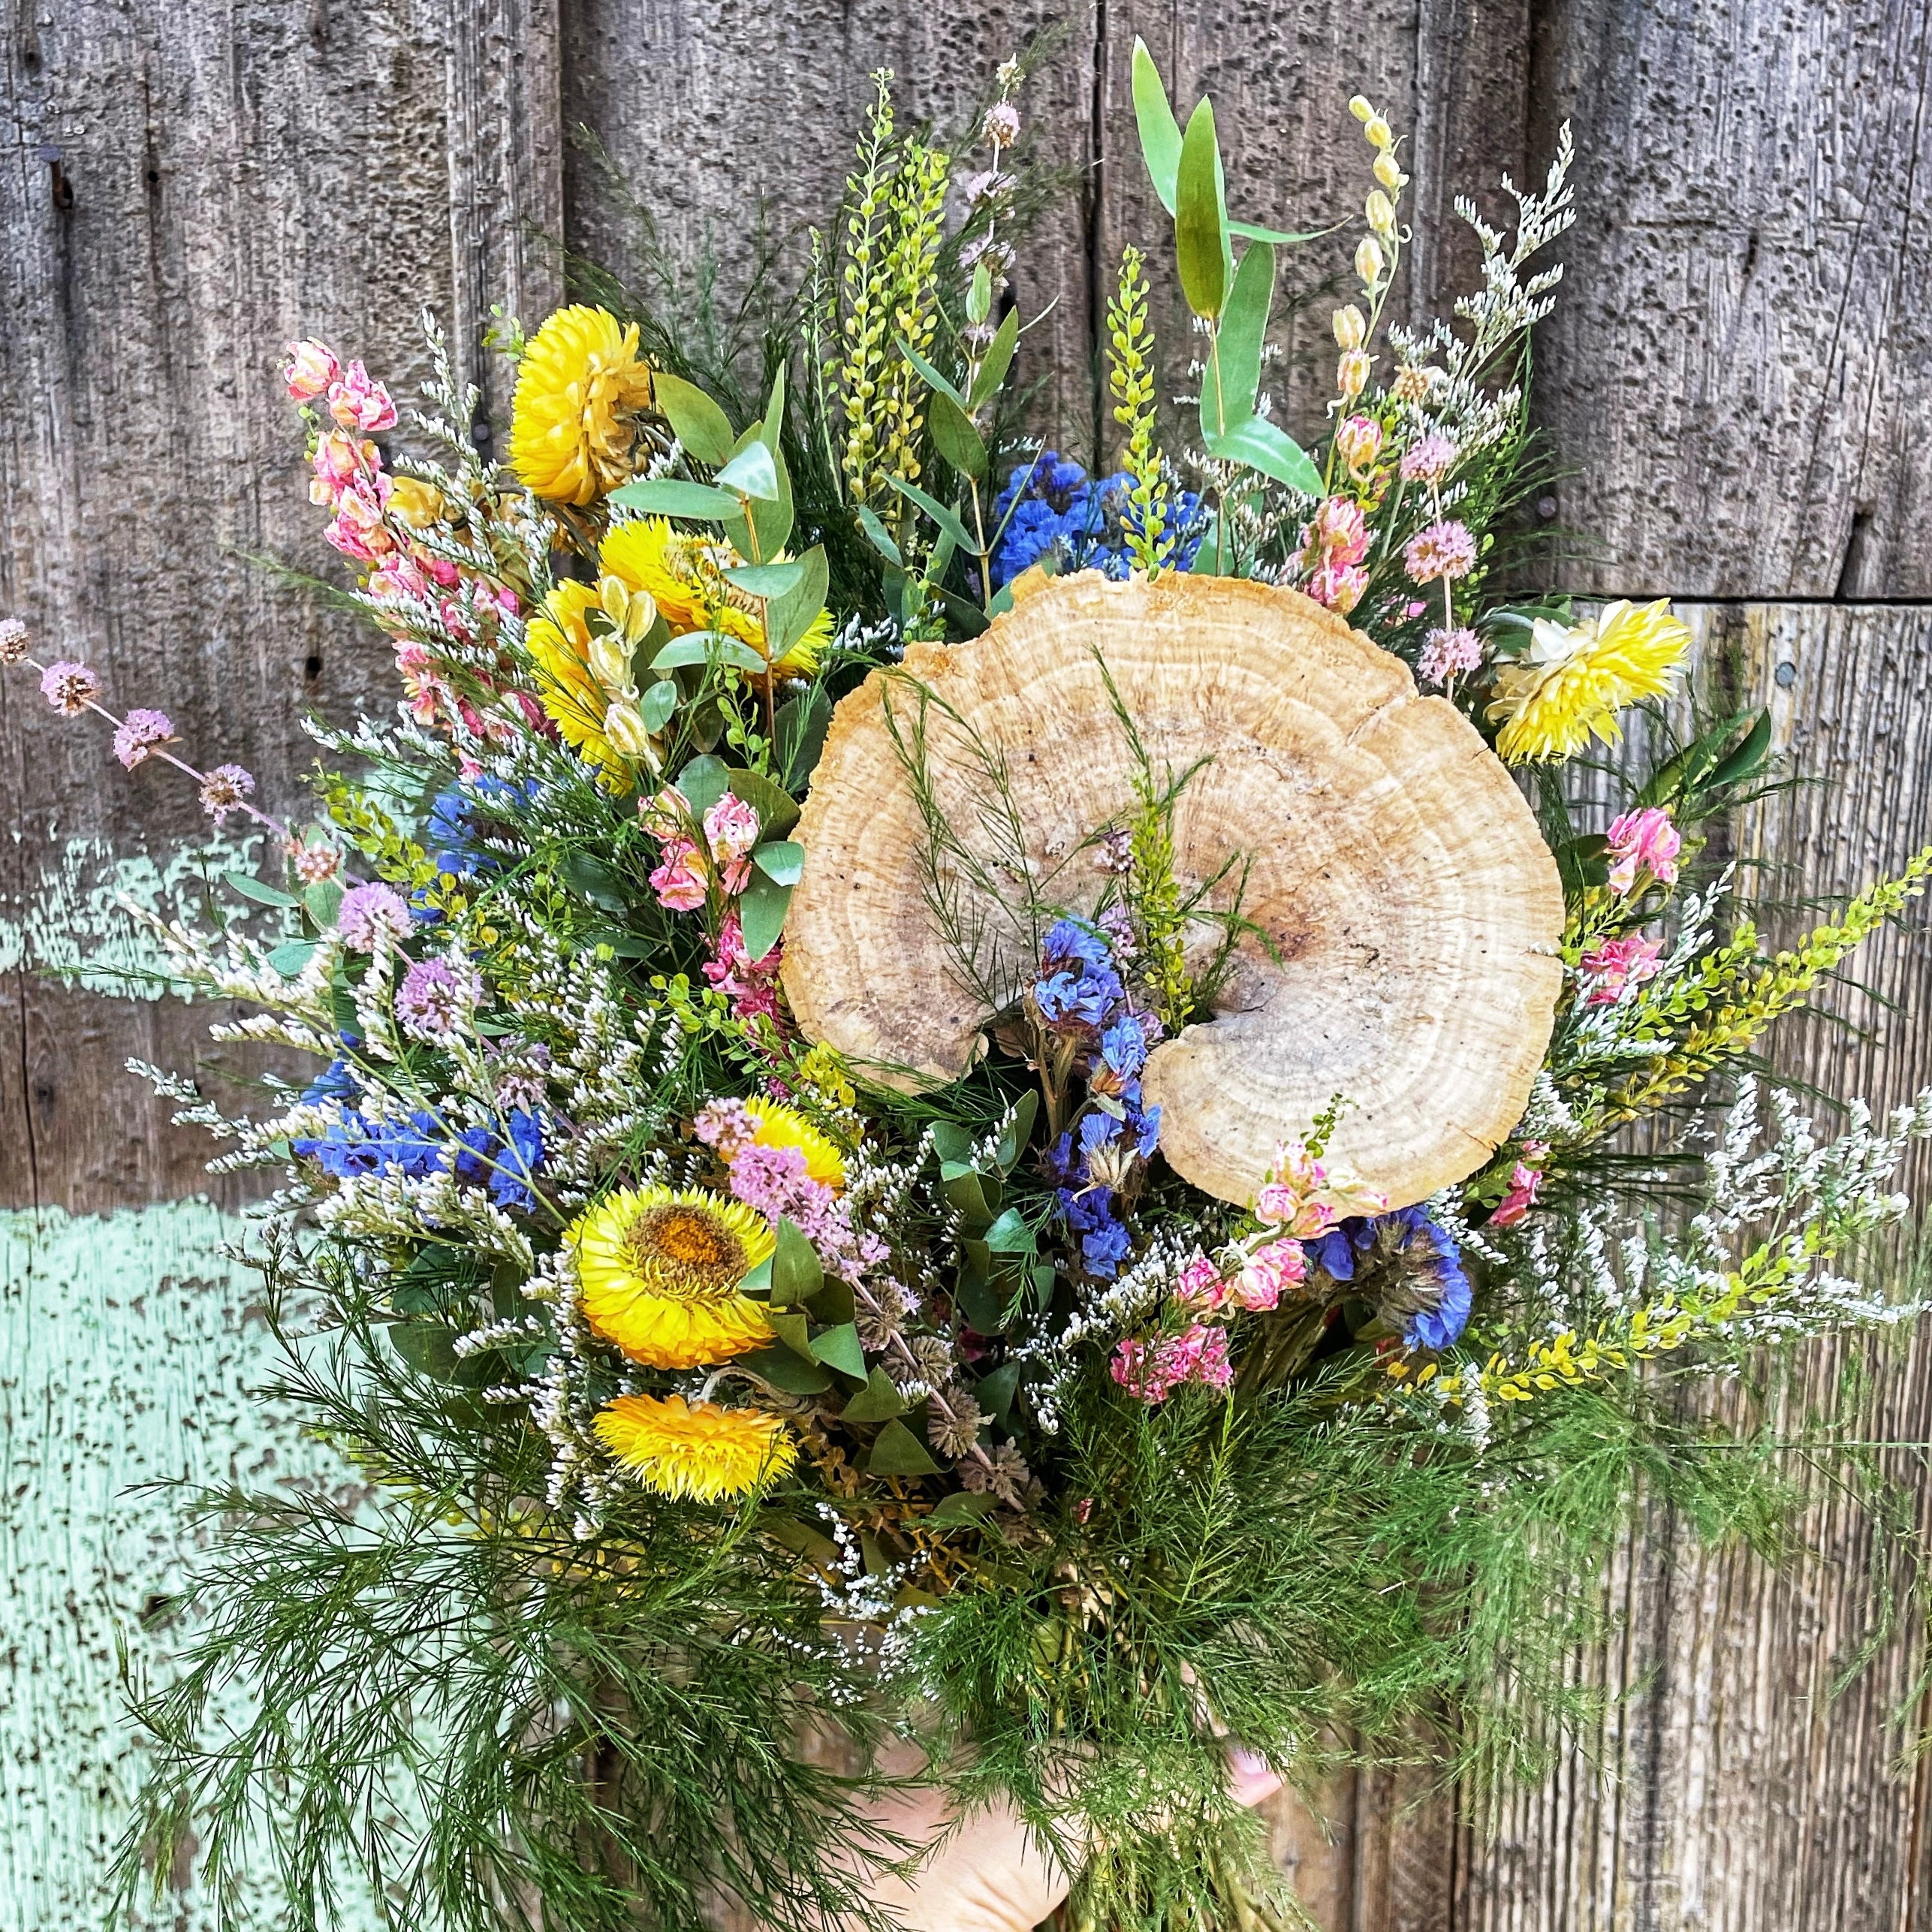 Spring Equinox Dried Flower and Mushroom Bouquet